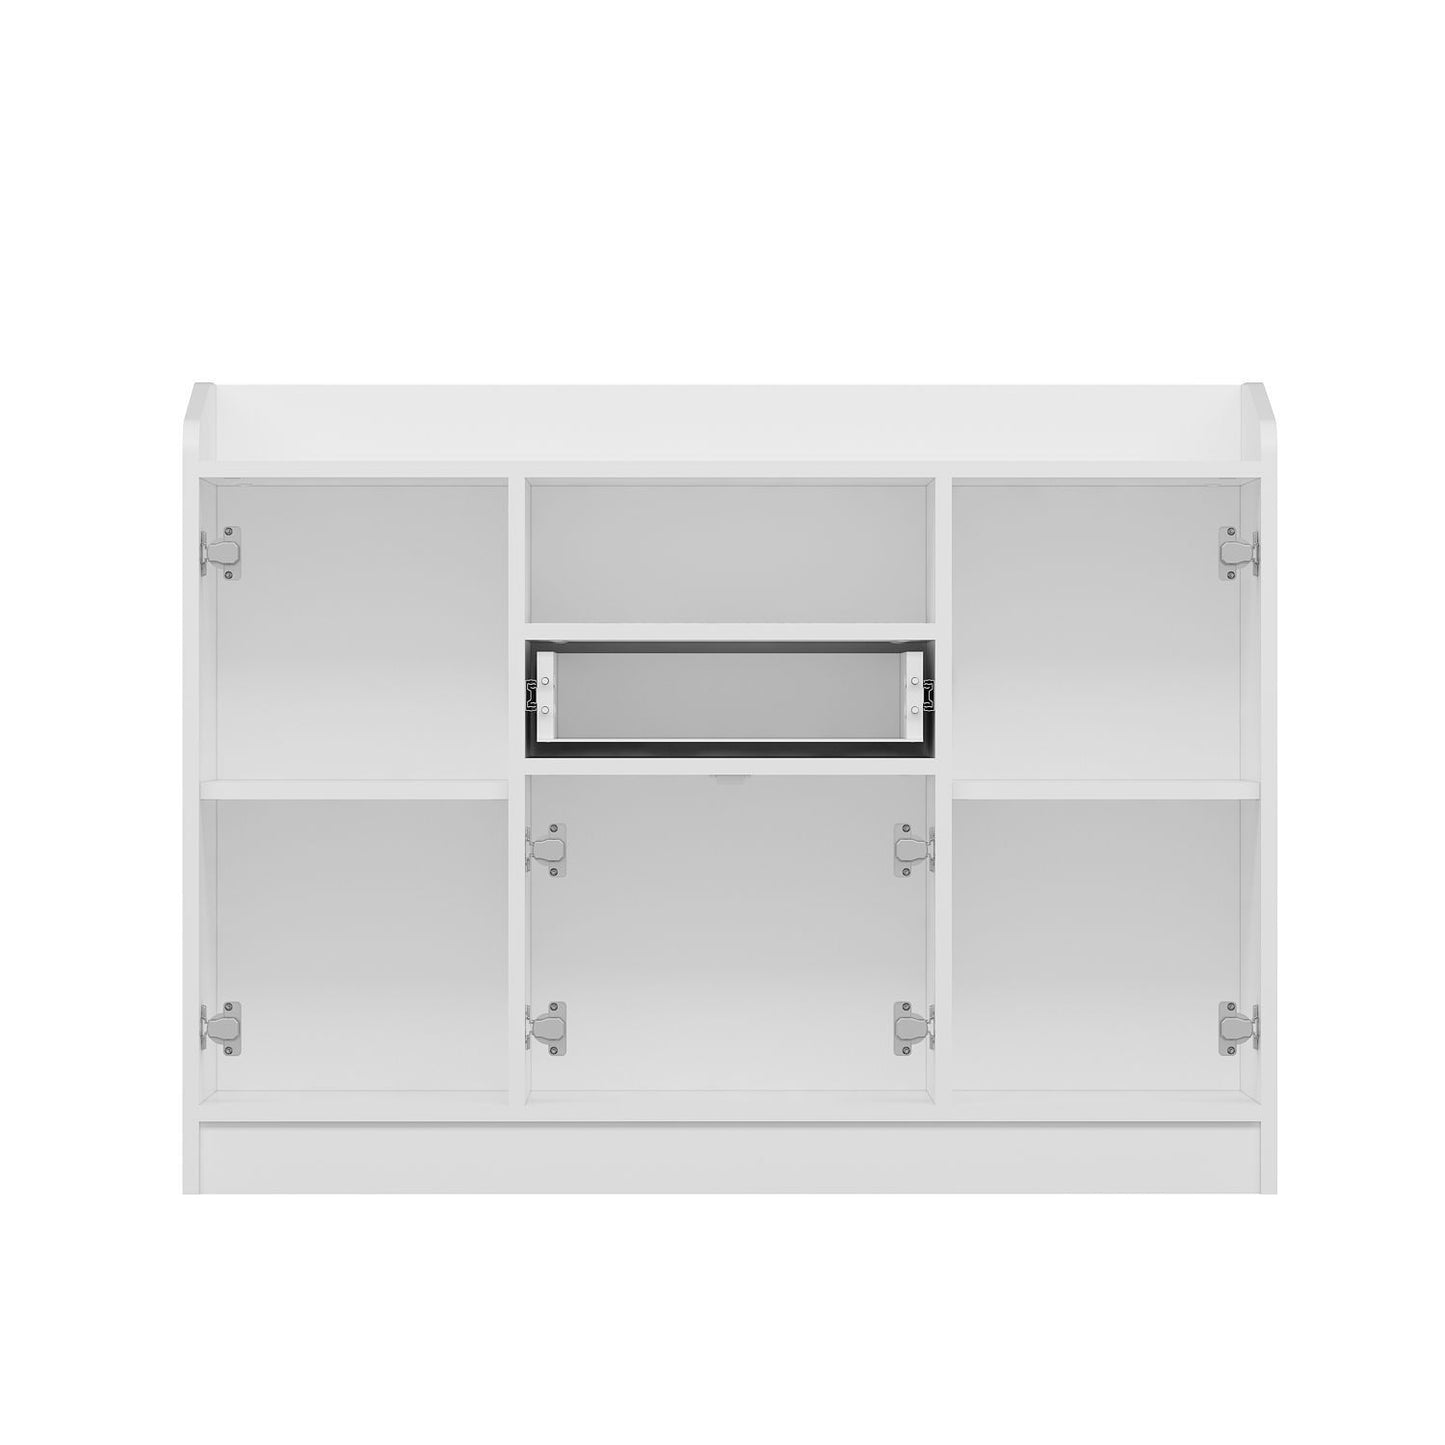 Arina - 8863 - Multi Purpose Cabinet